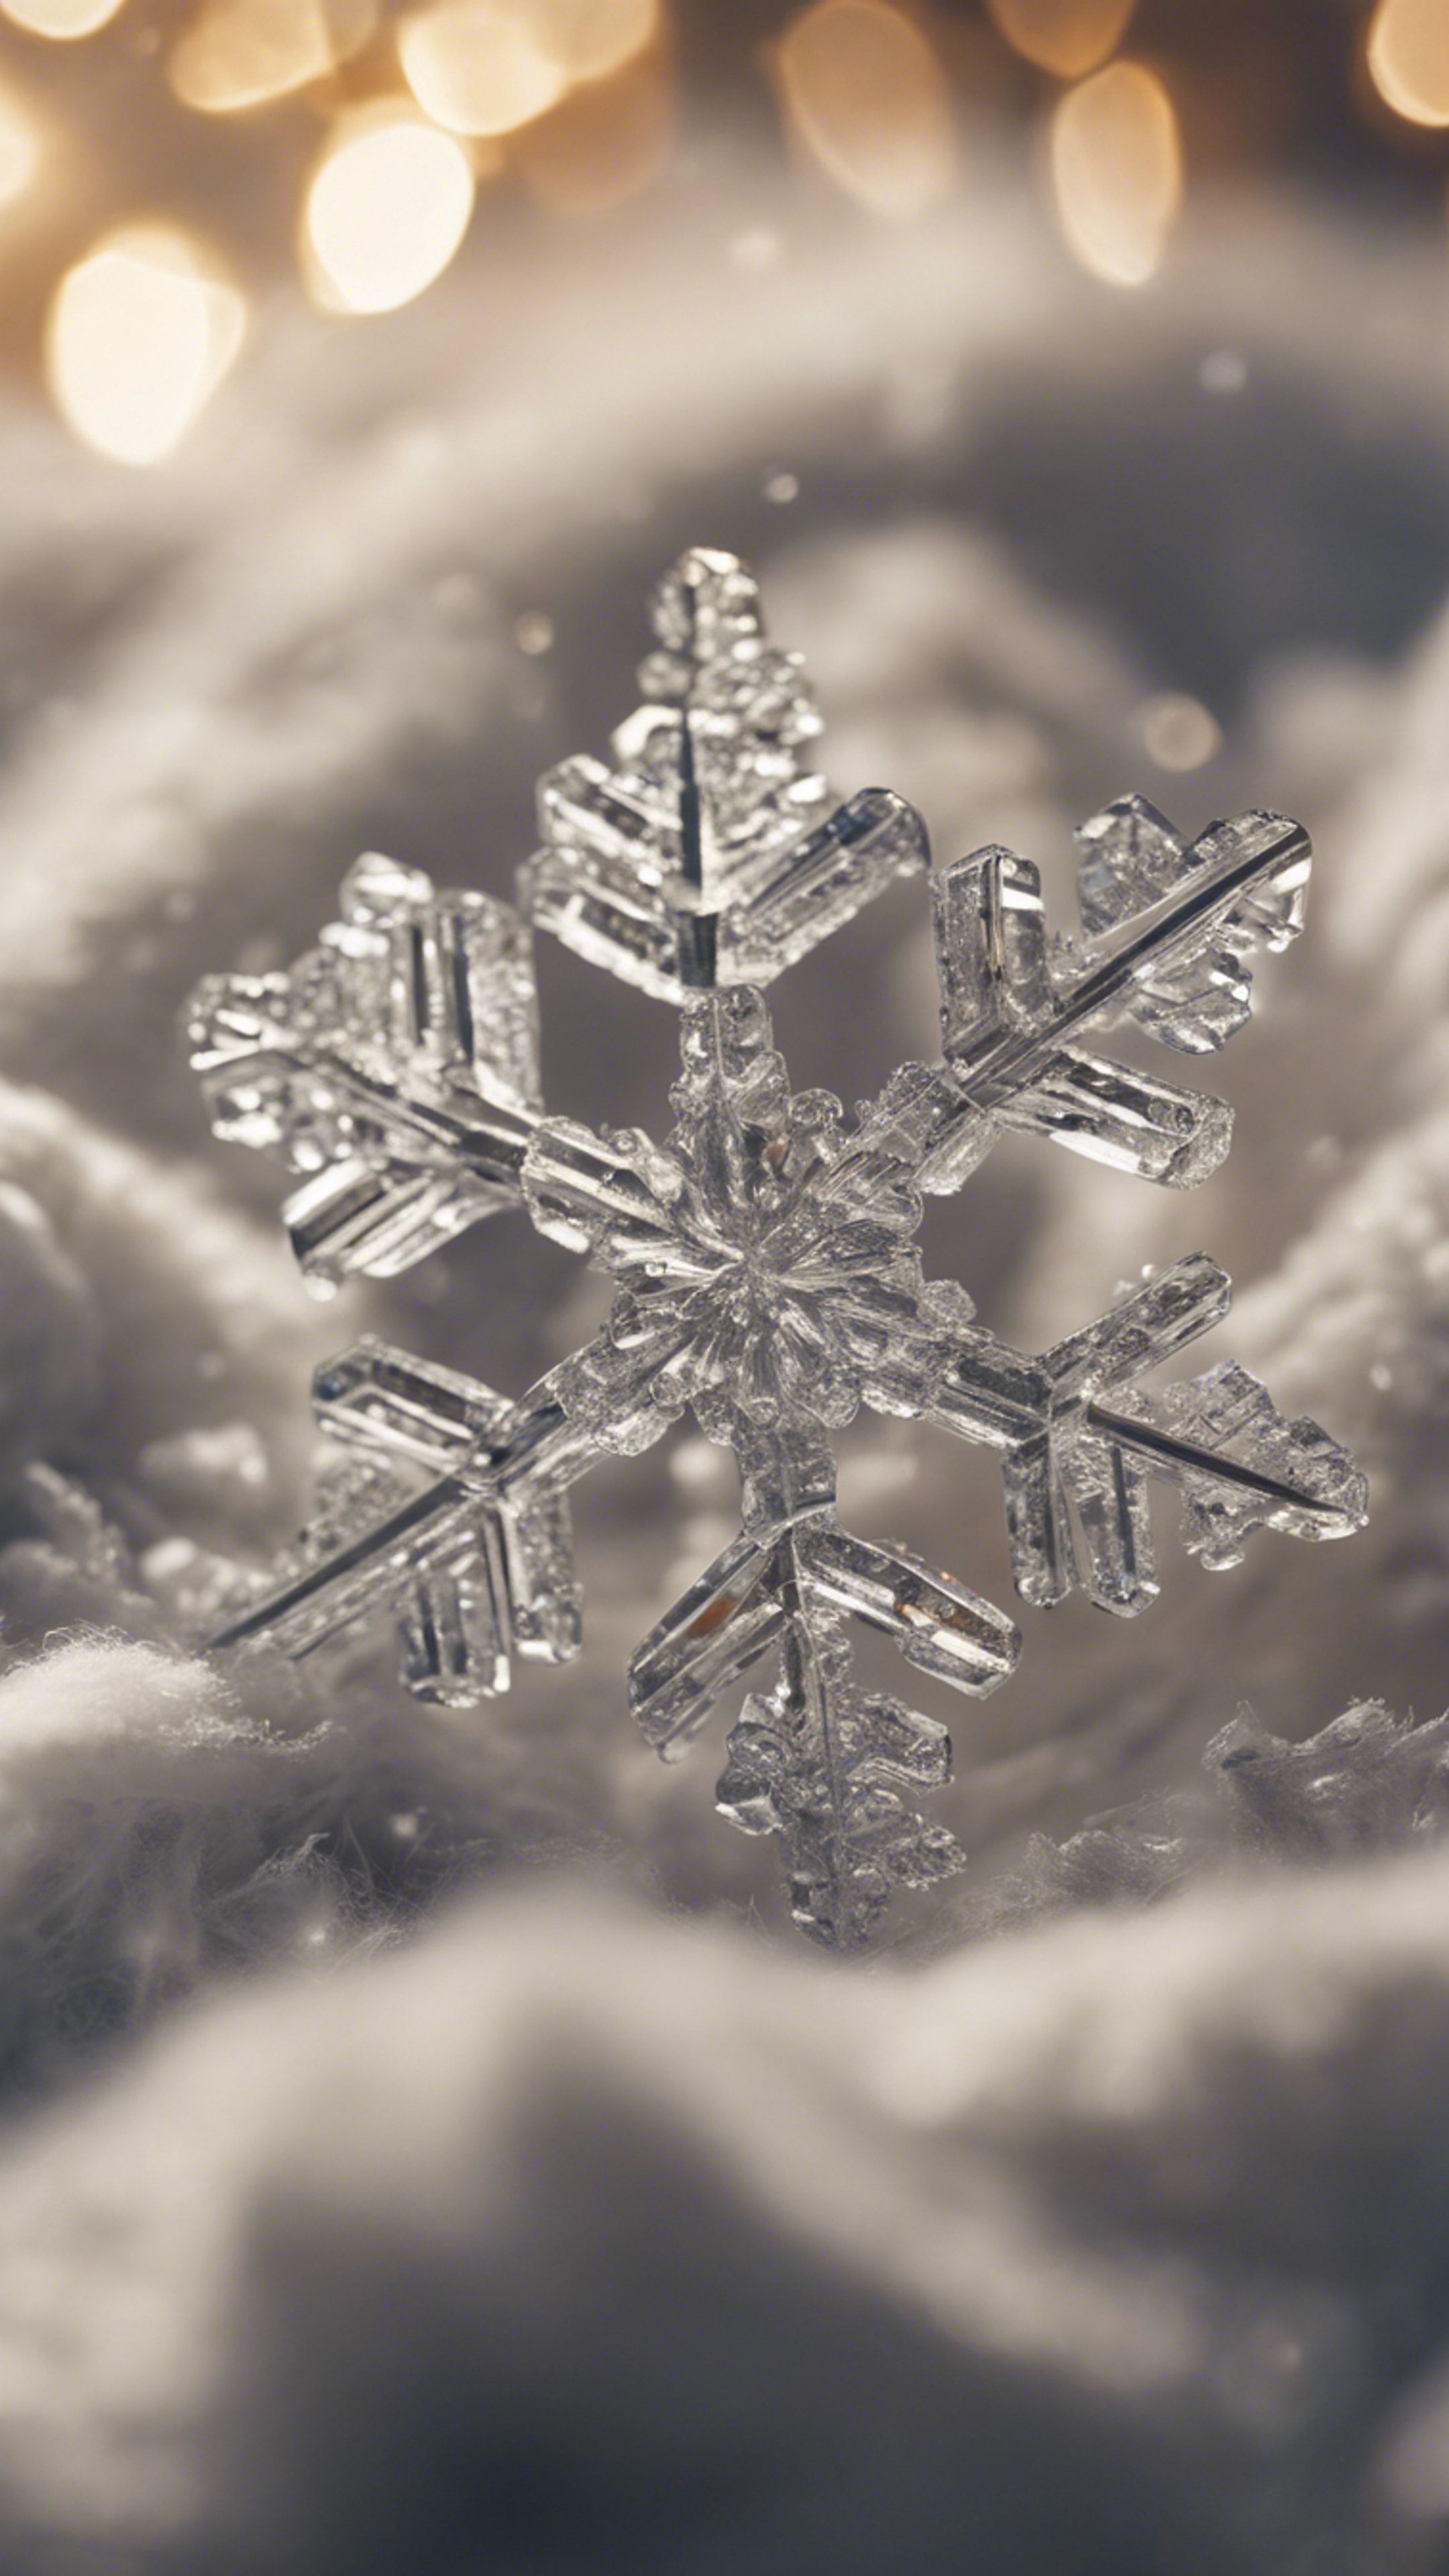 “A close-up of a snowflake lying on a woolen blanket, showcasing its unique and aesthetic crystal pattern.” Divar kağızı[861aaeb8969a4adbad4c]